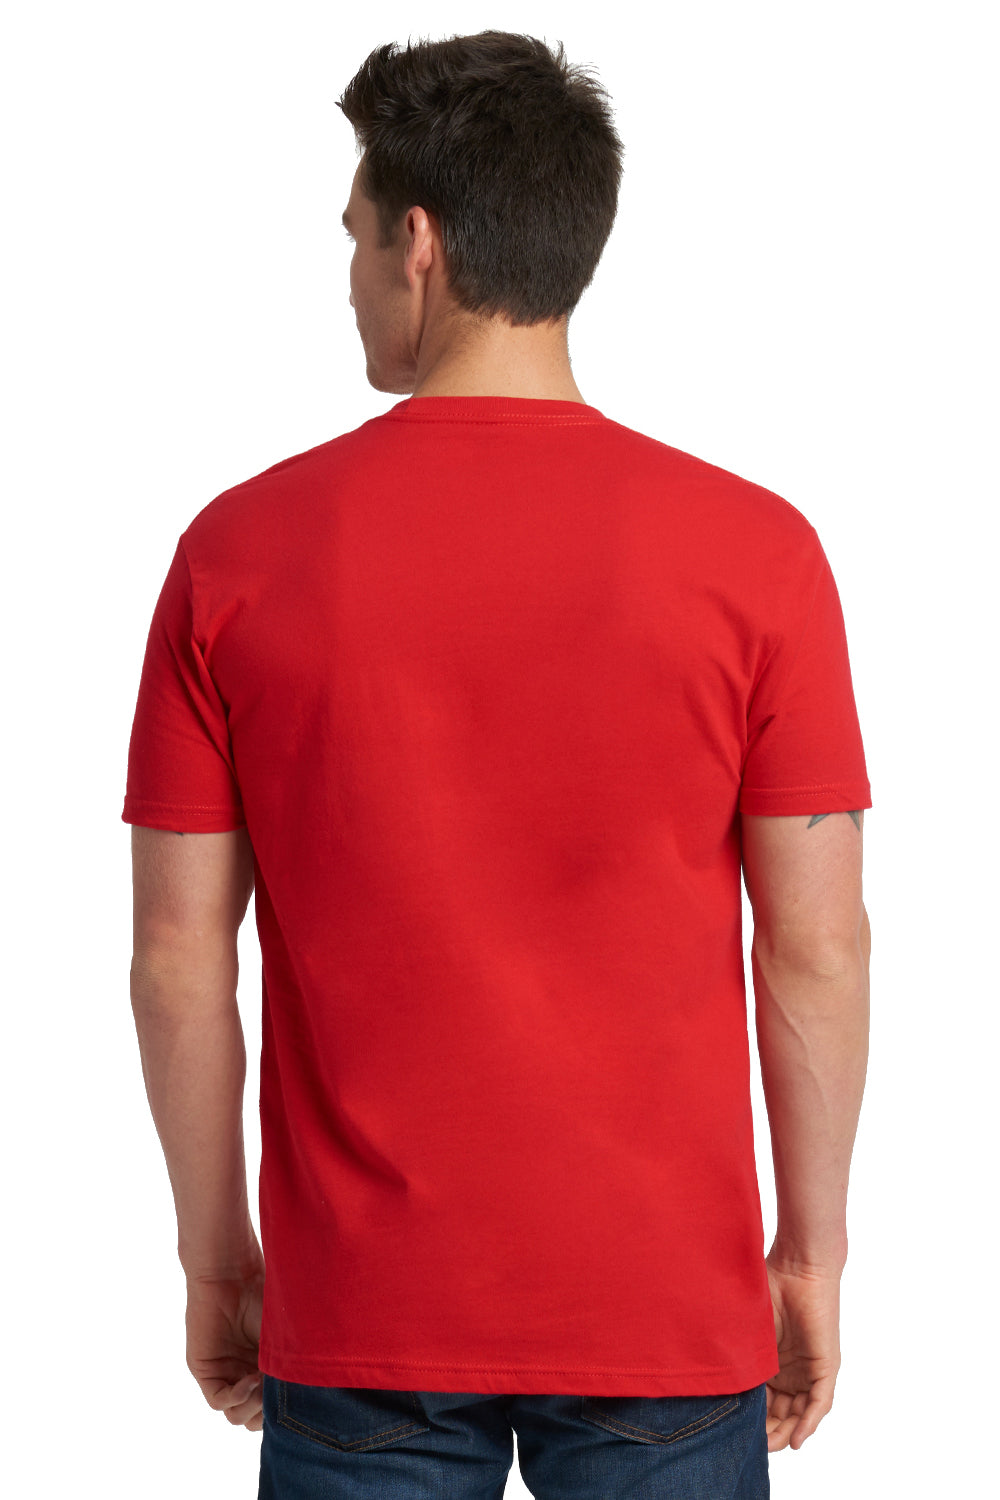 Next Level 3600 Mens Fine Jersey Short Sleeve Crewneck T-Shirt Red Back